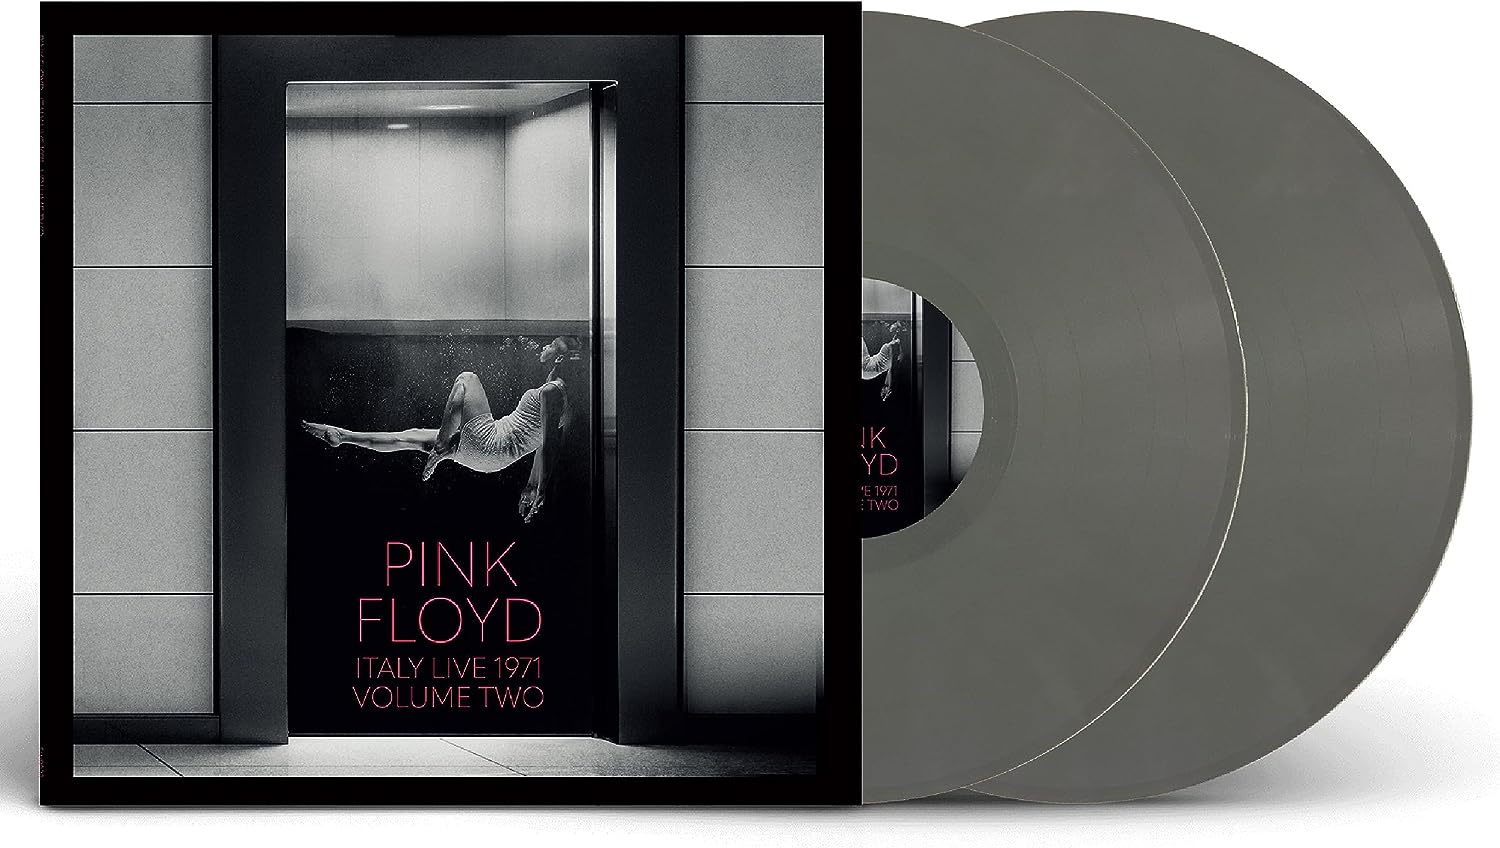 PINK FLOYD - Italy Live 1971 vol.2 - Limited Grey Vinyl